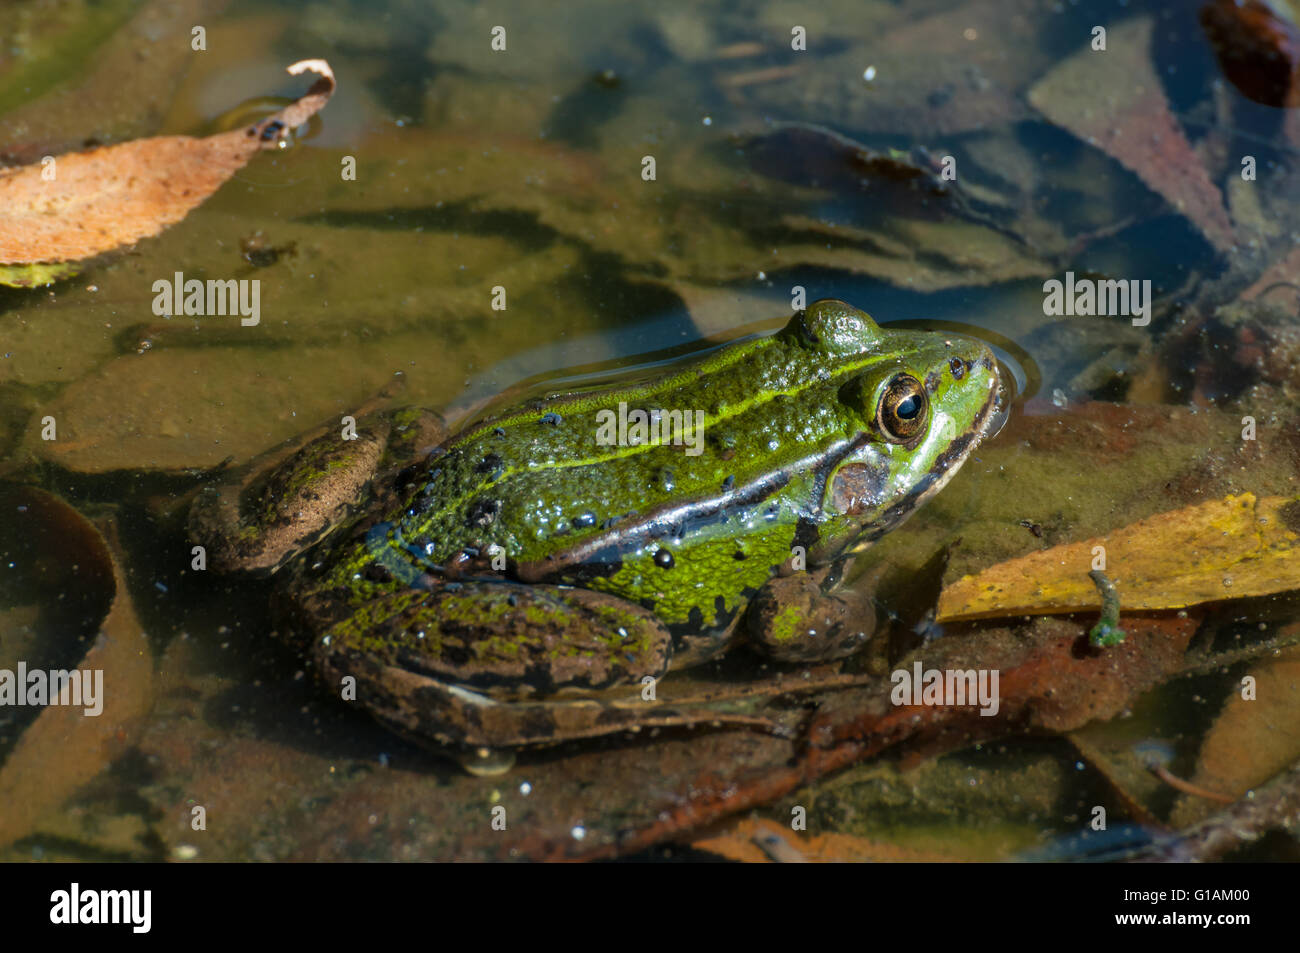 Green Edible frog - common water frog (Rana esculenta, Pelophylax esculentus) Stock Photo